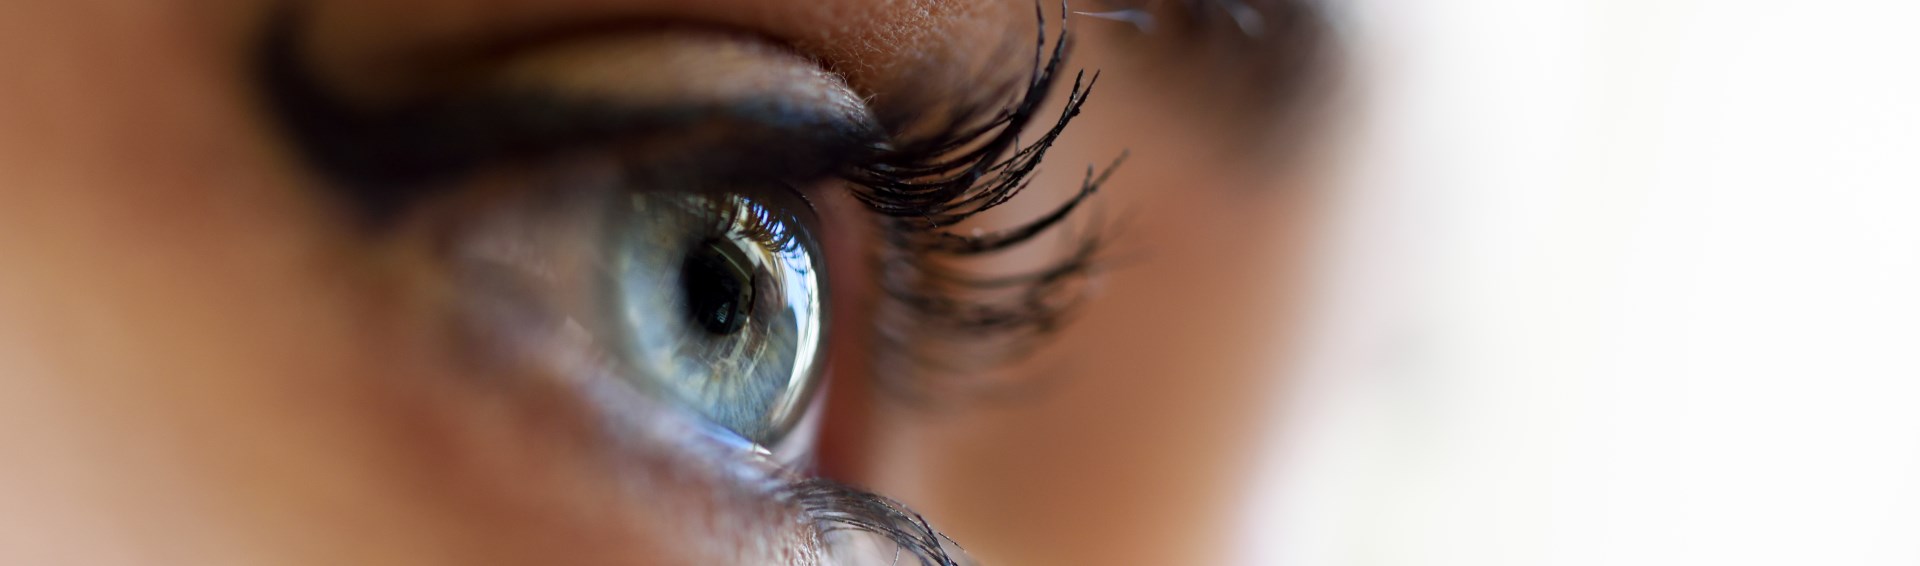 Close-up of young woman’s blue eyes with long eyelashes. Make-eye